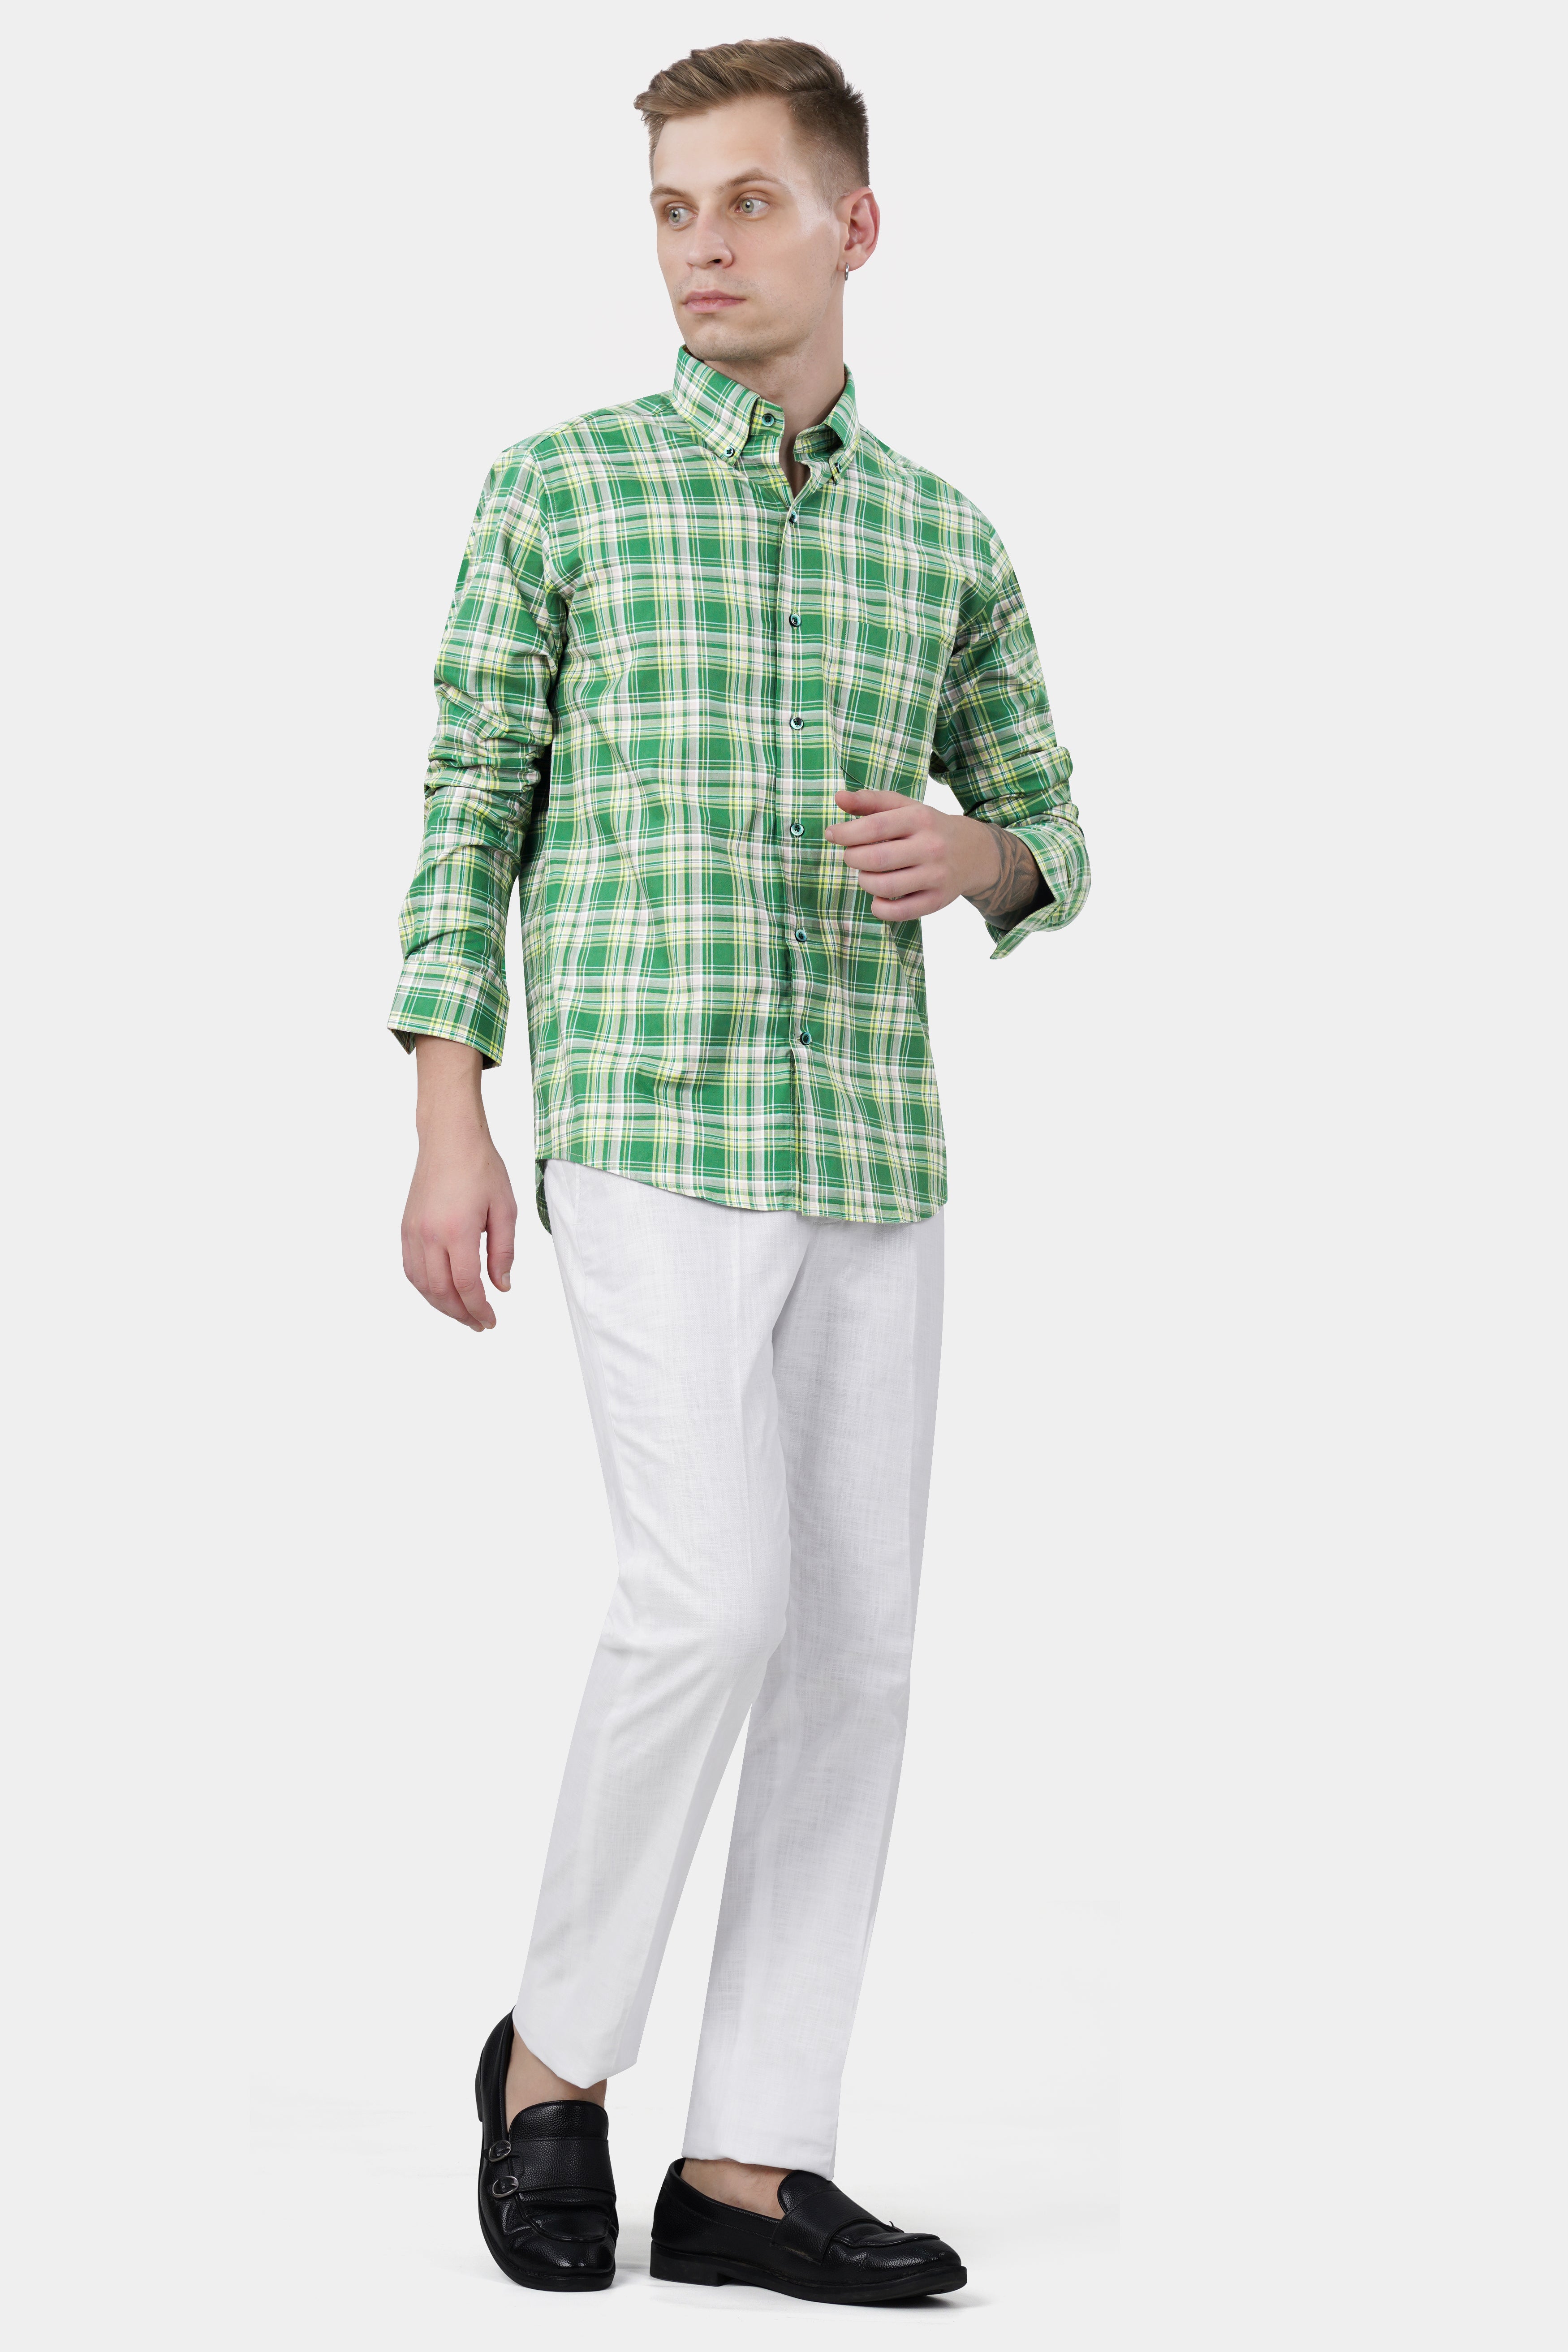 Salem Green and White Twill Plaid Premium Cotton Shirt